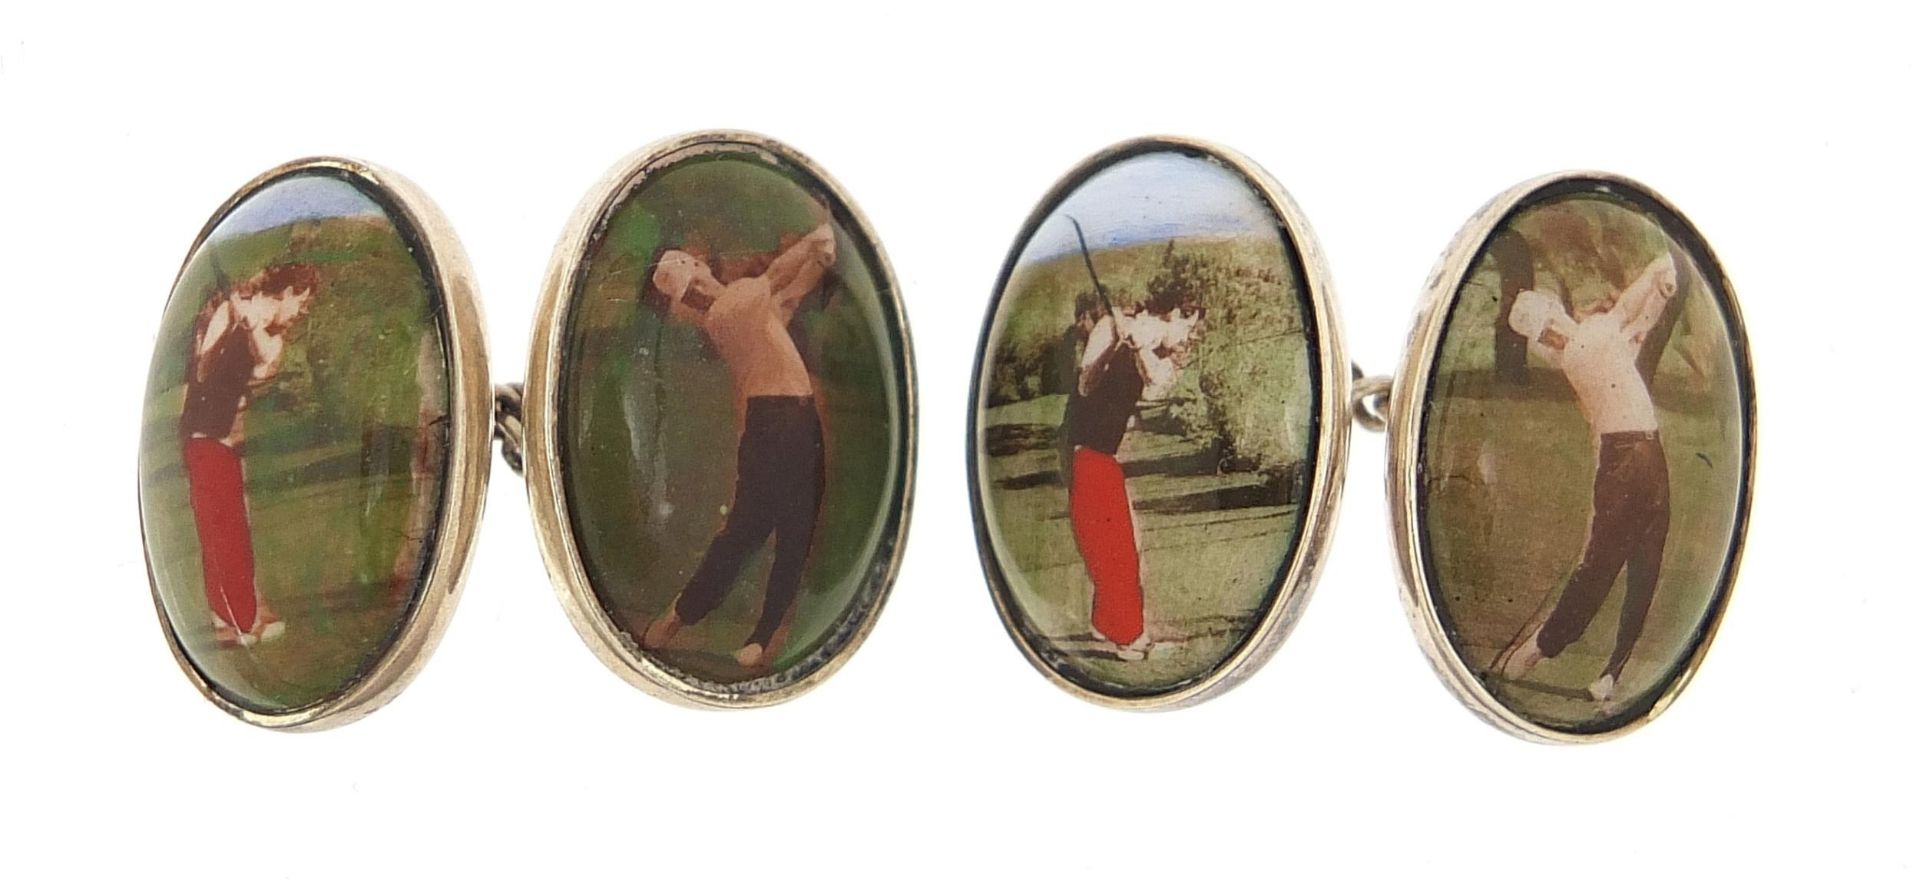 Pair of silver and enamel golfing interest cufflinks, 1.8cm high, 11.7g